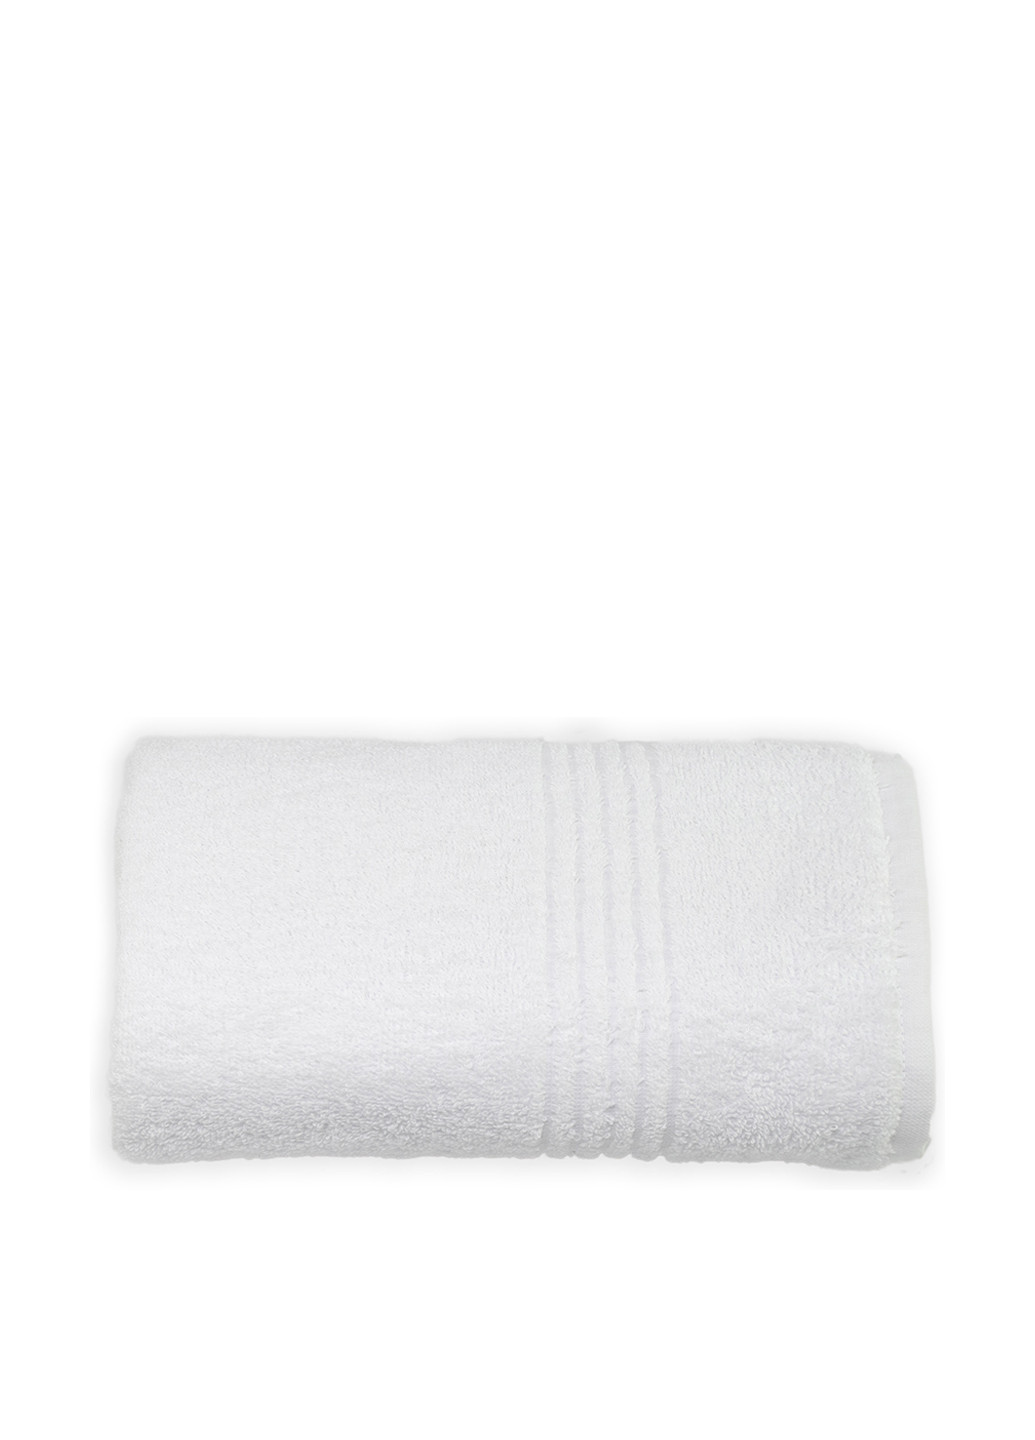 No Brand полотенце, 60х110 см однотонный белый производство - Турция